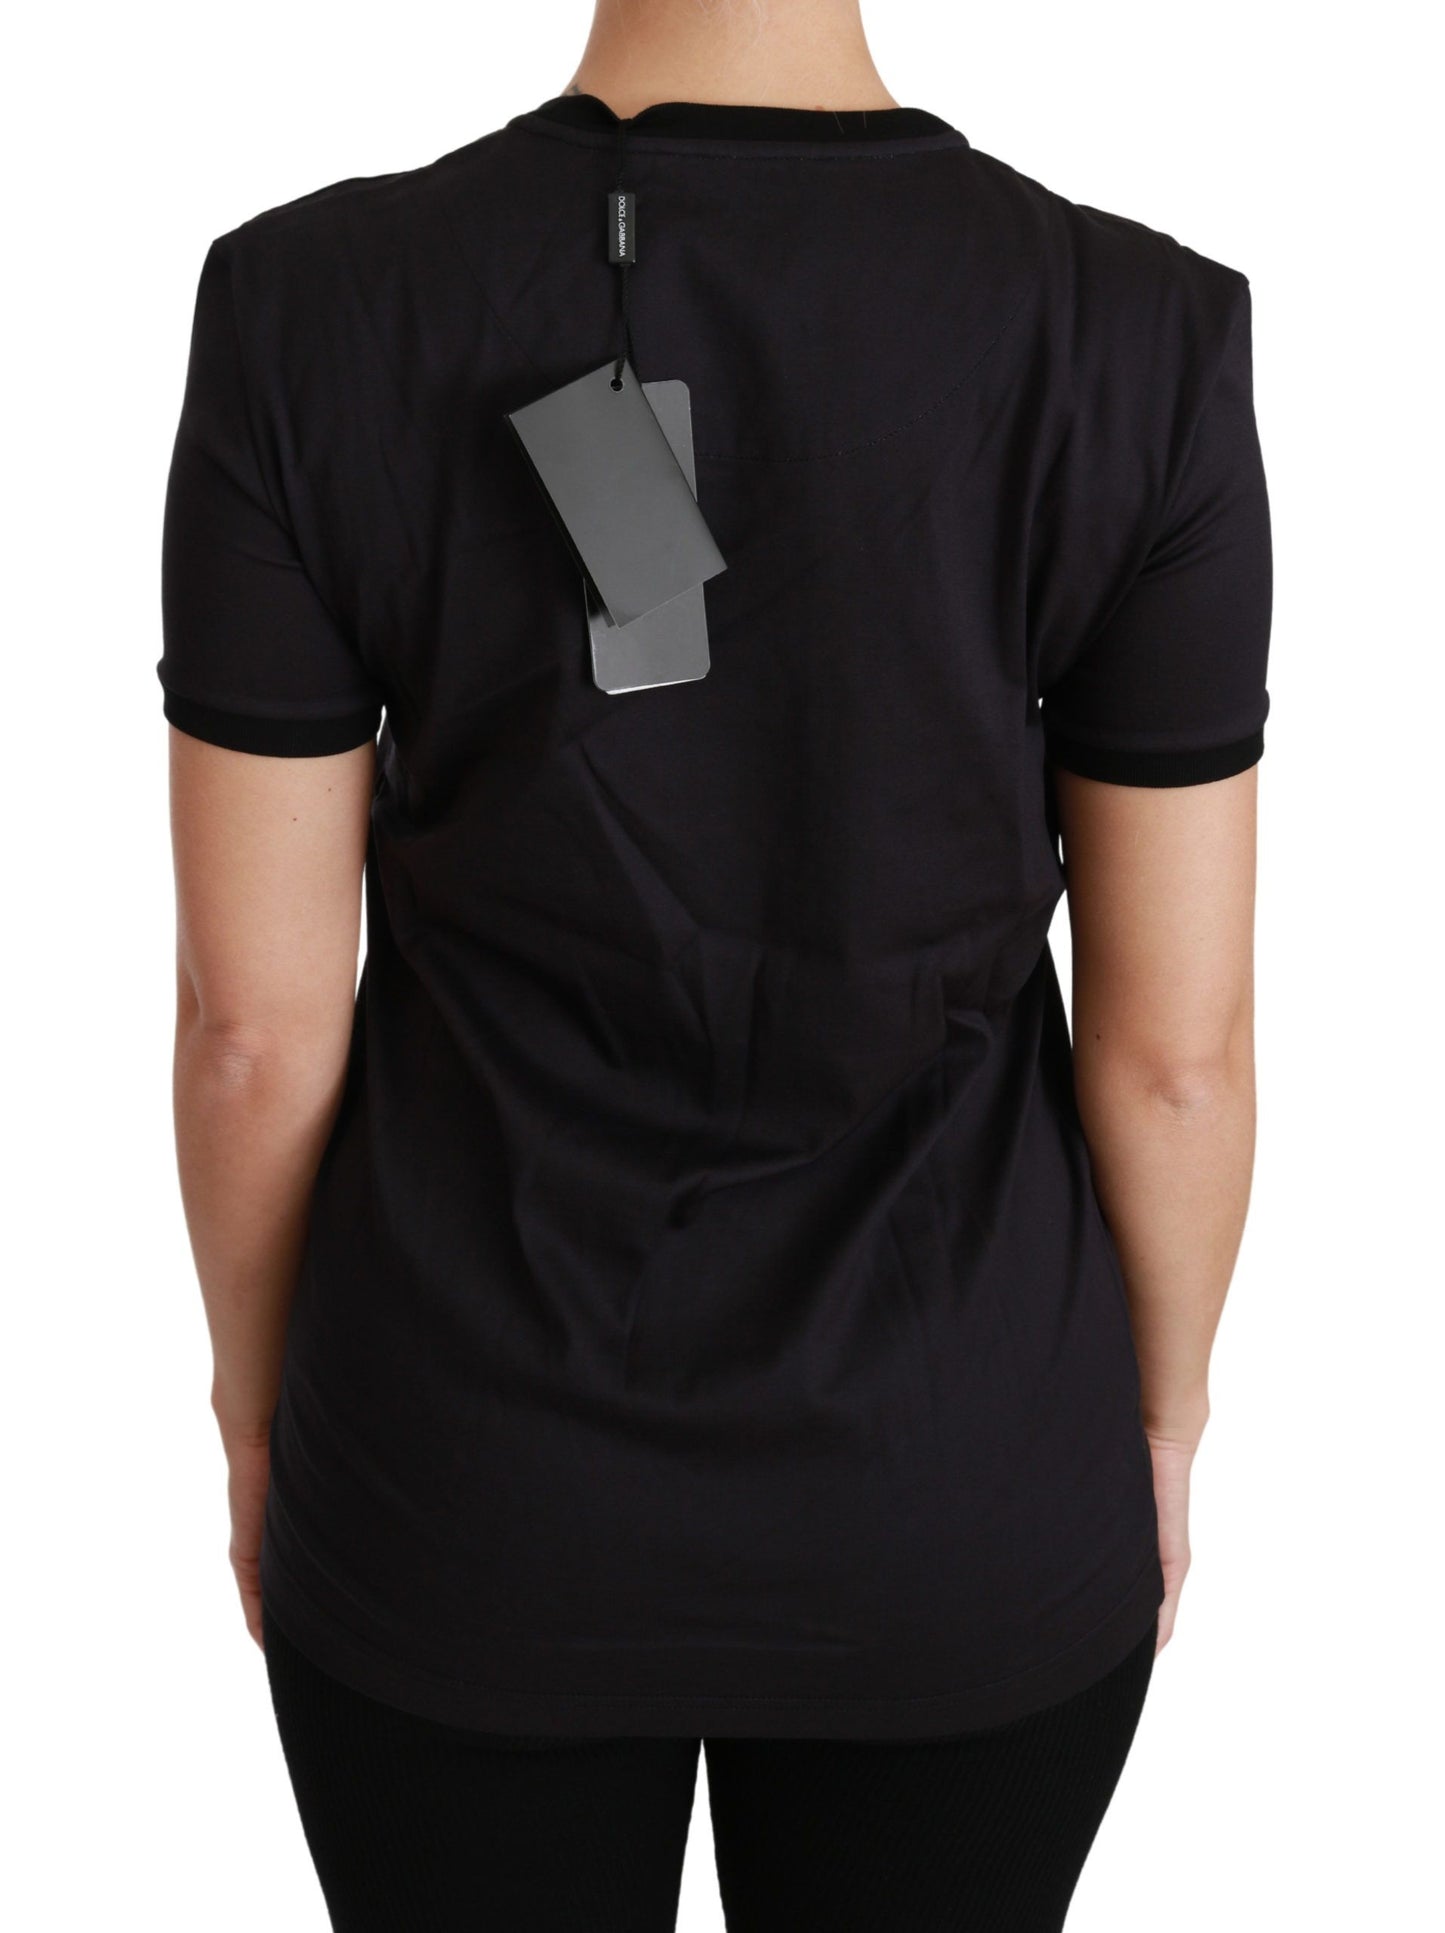 Dolce & Gabbana Black #ImAChristmasTree Crewneck Top T-shirt